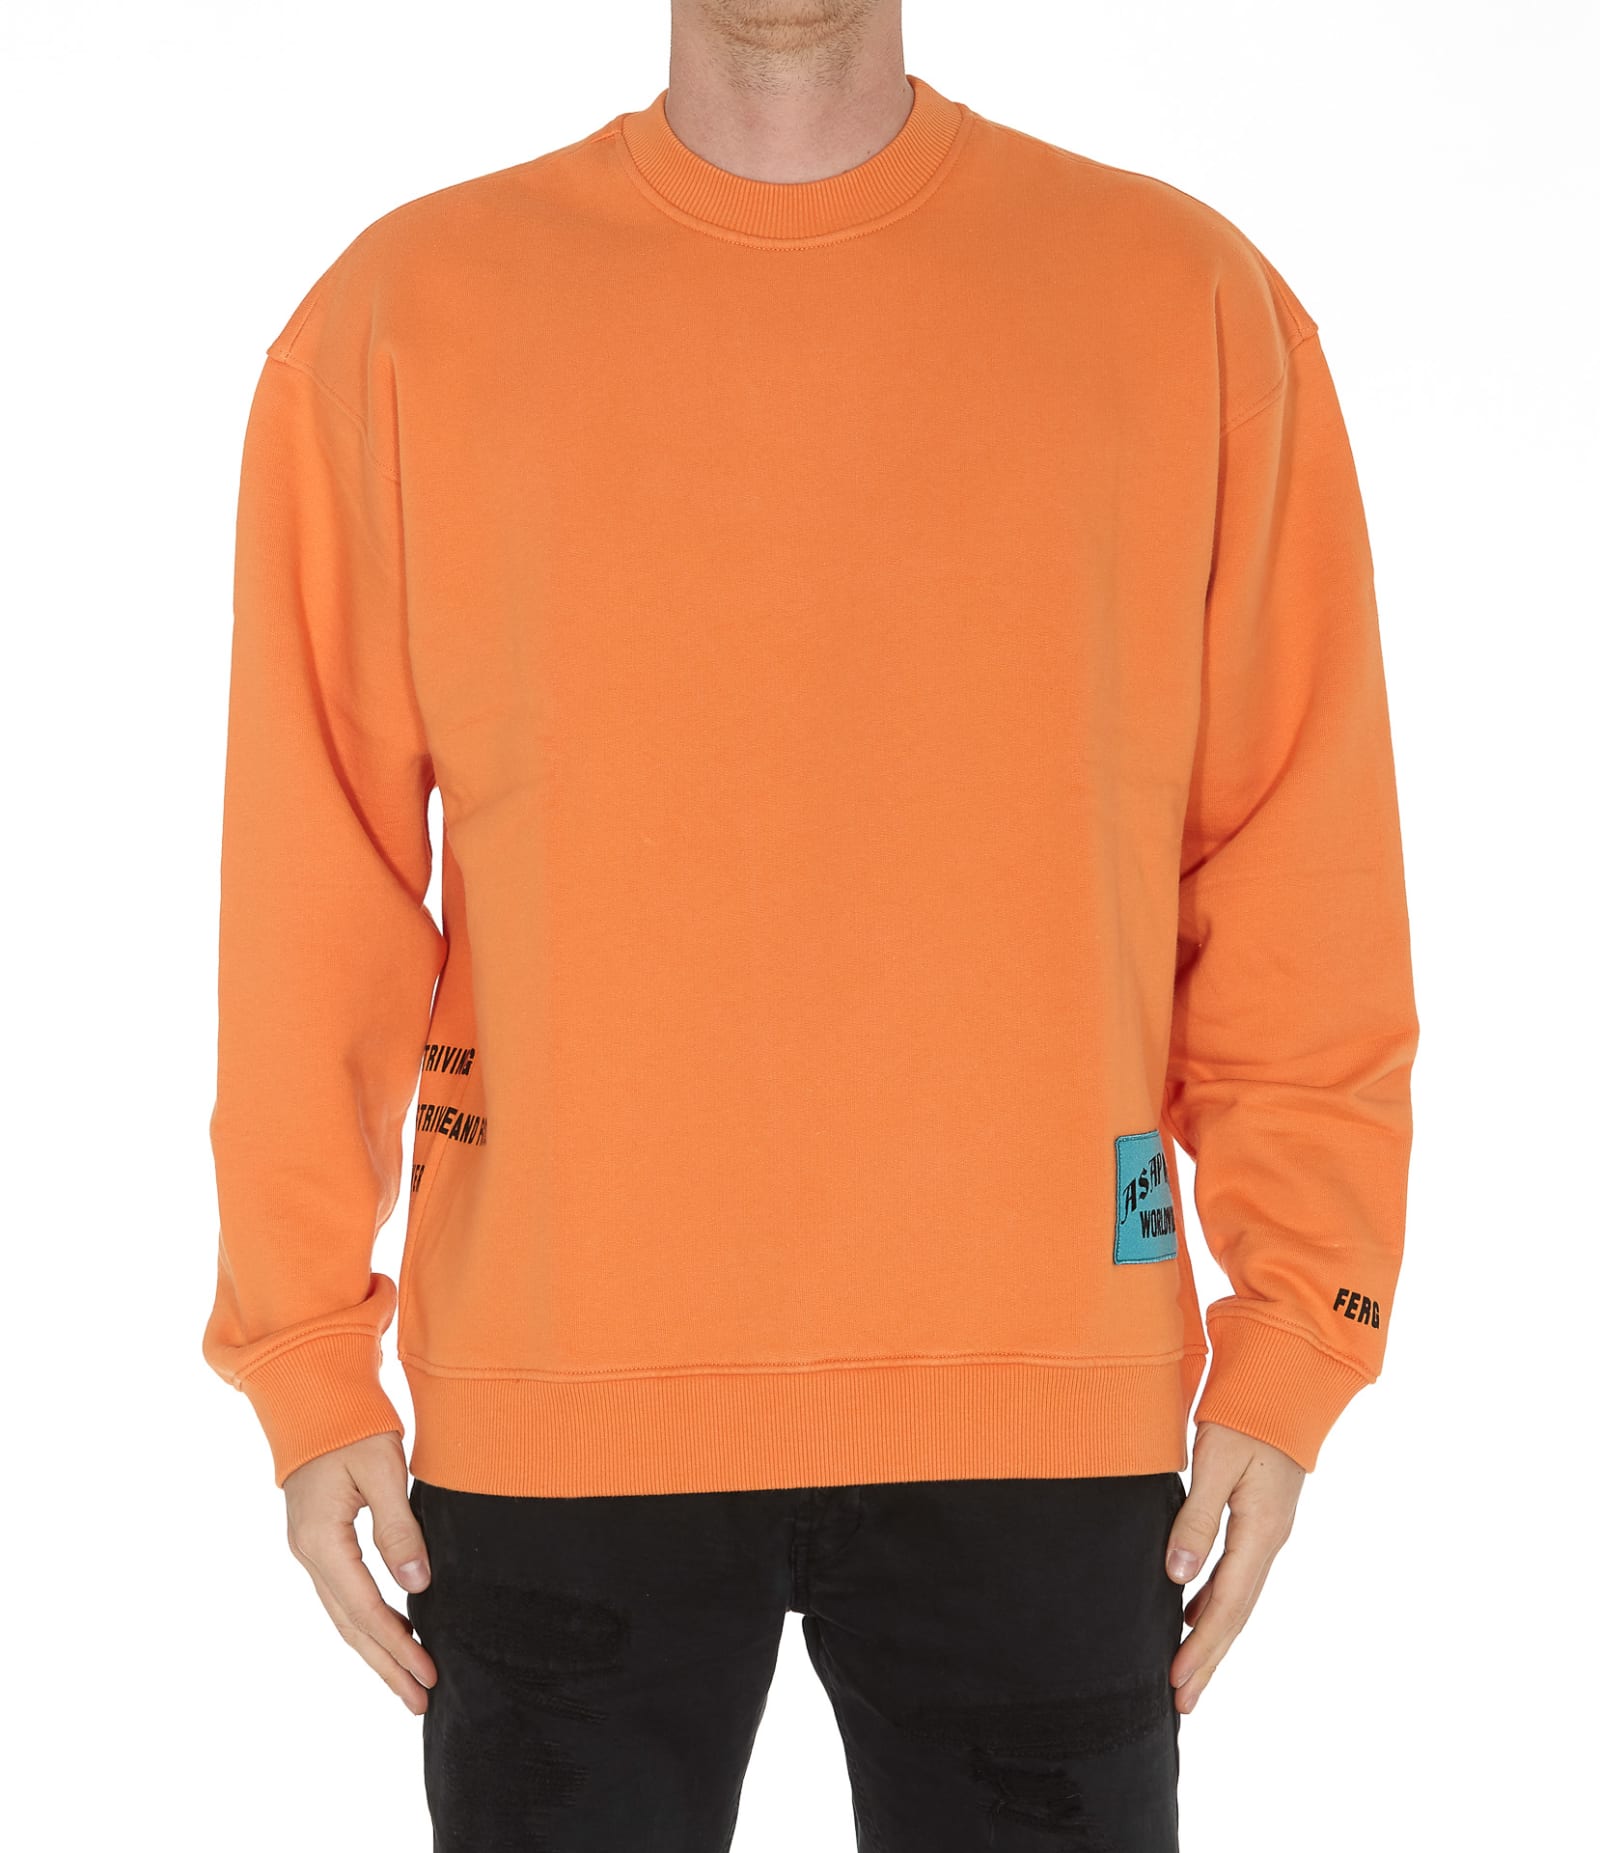 Aap Ferg By Platformx A$ap Ferg By Platformx Sweatshirt In Orange